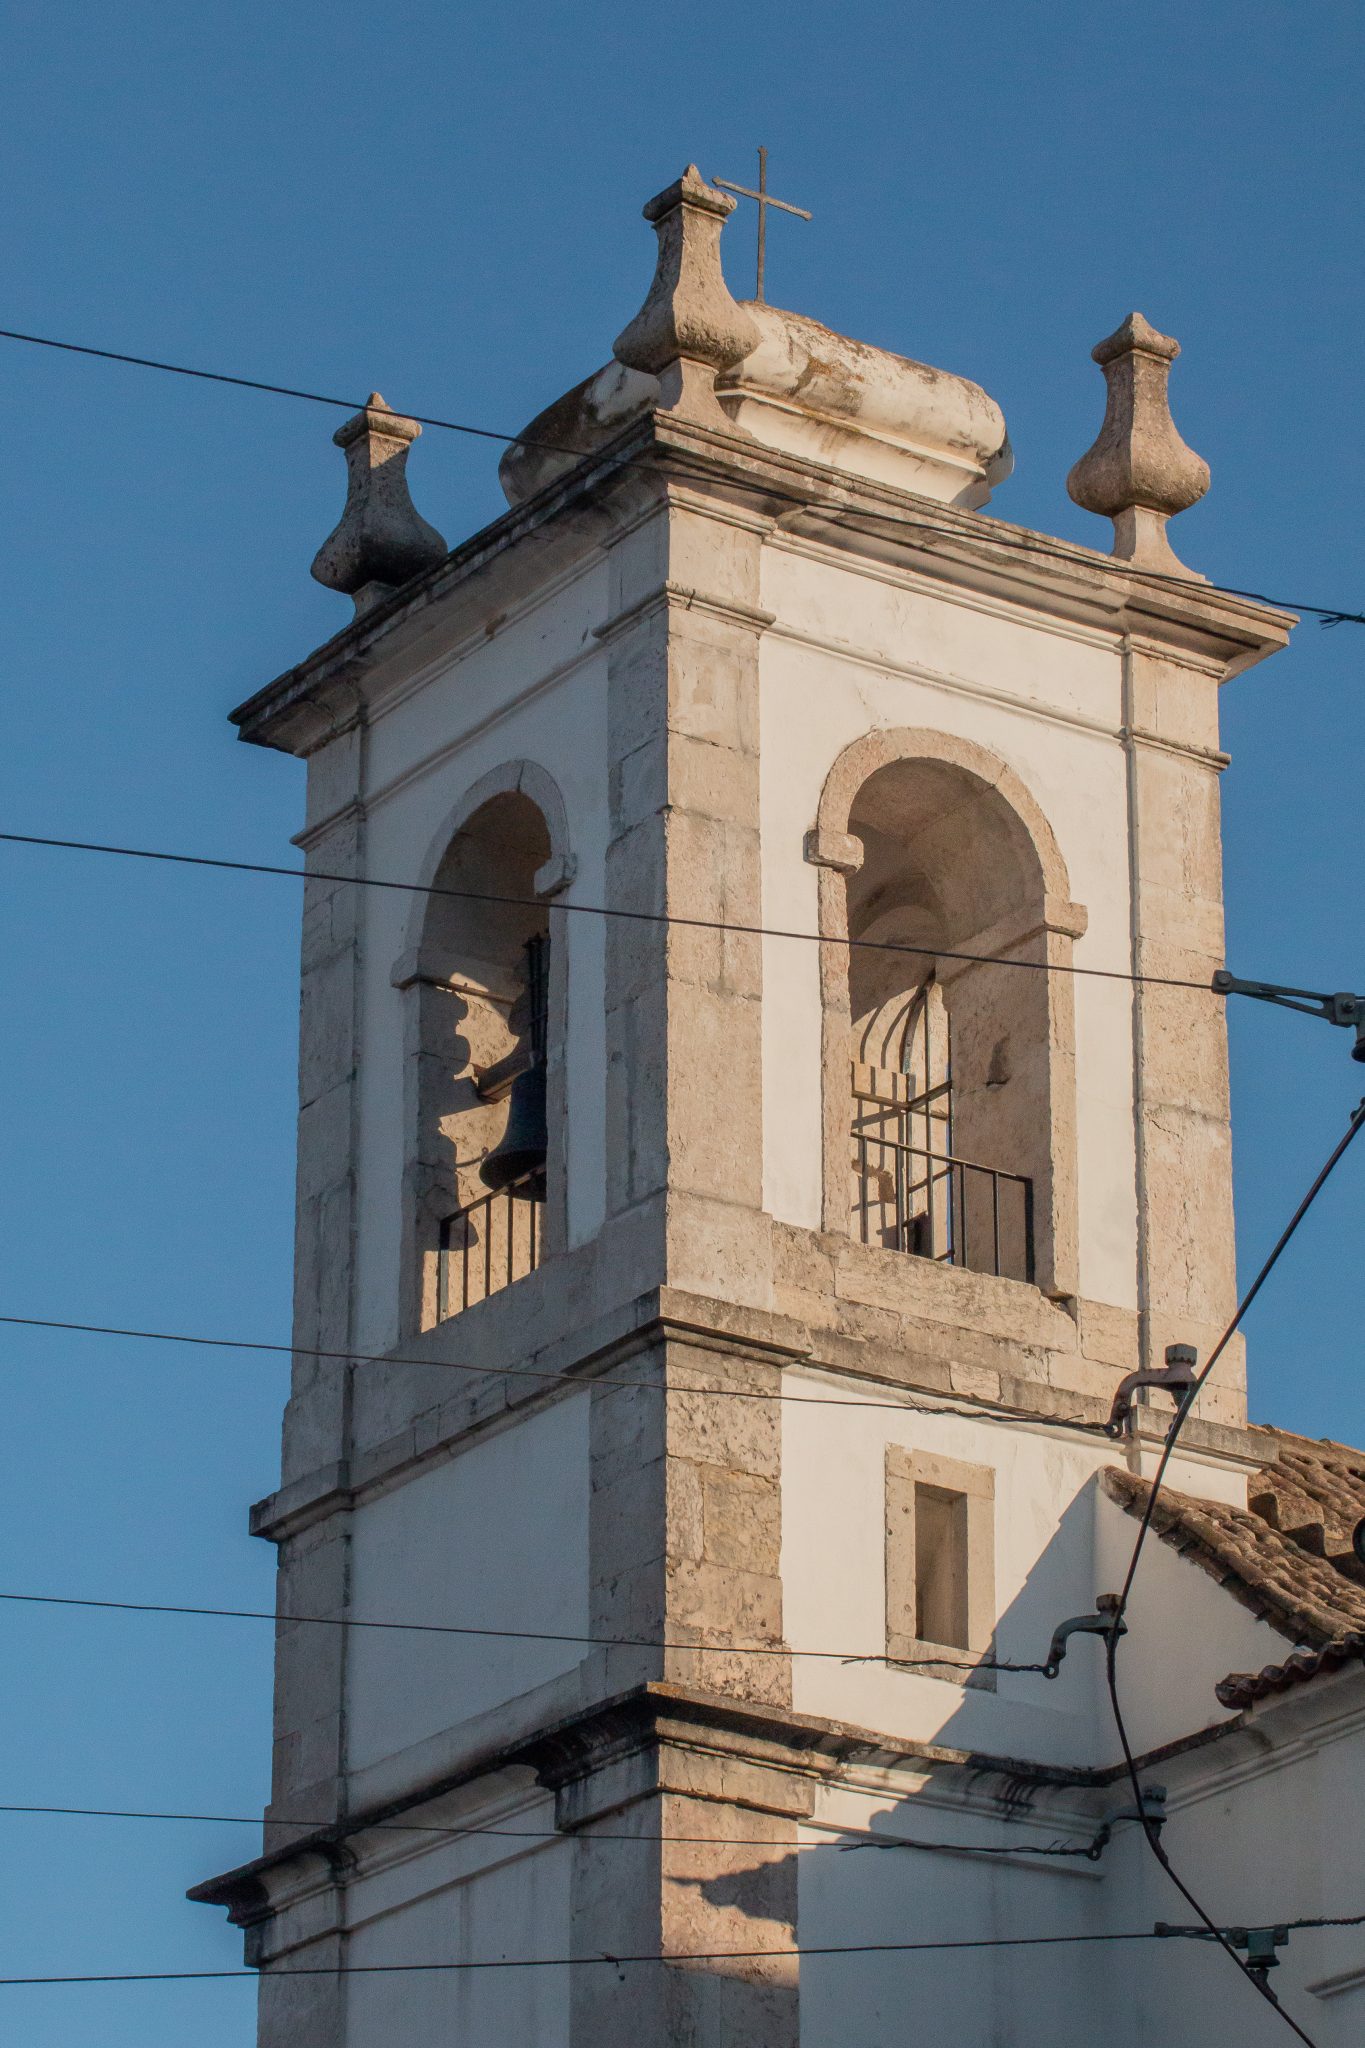 Sta. Luzia Church bell tower, in Lisbon - Torre do sino da Igreja de Sta. Luzia, em Lisboa